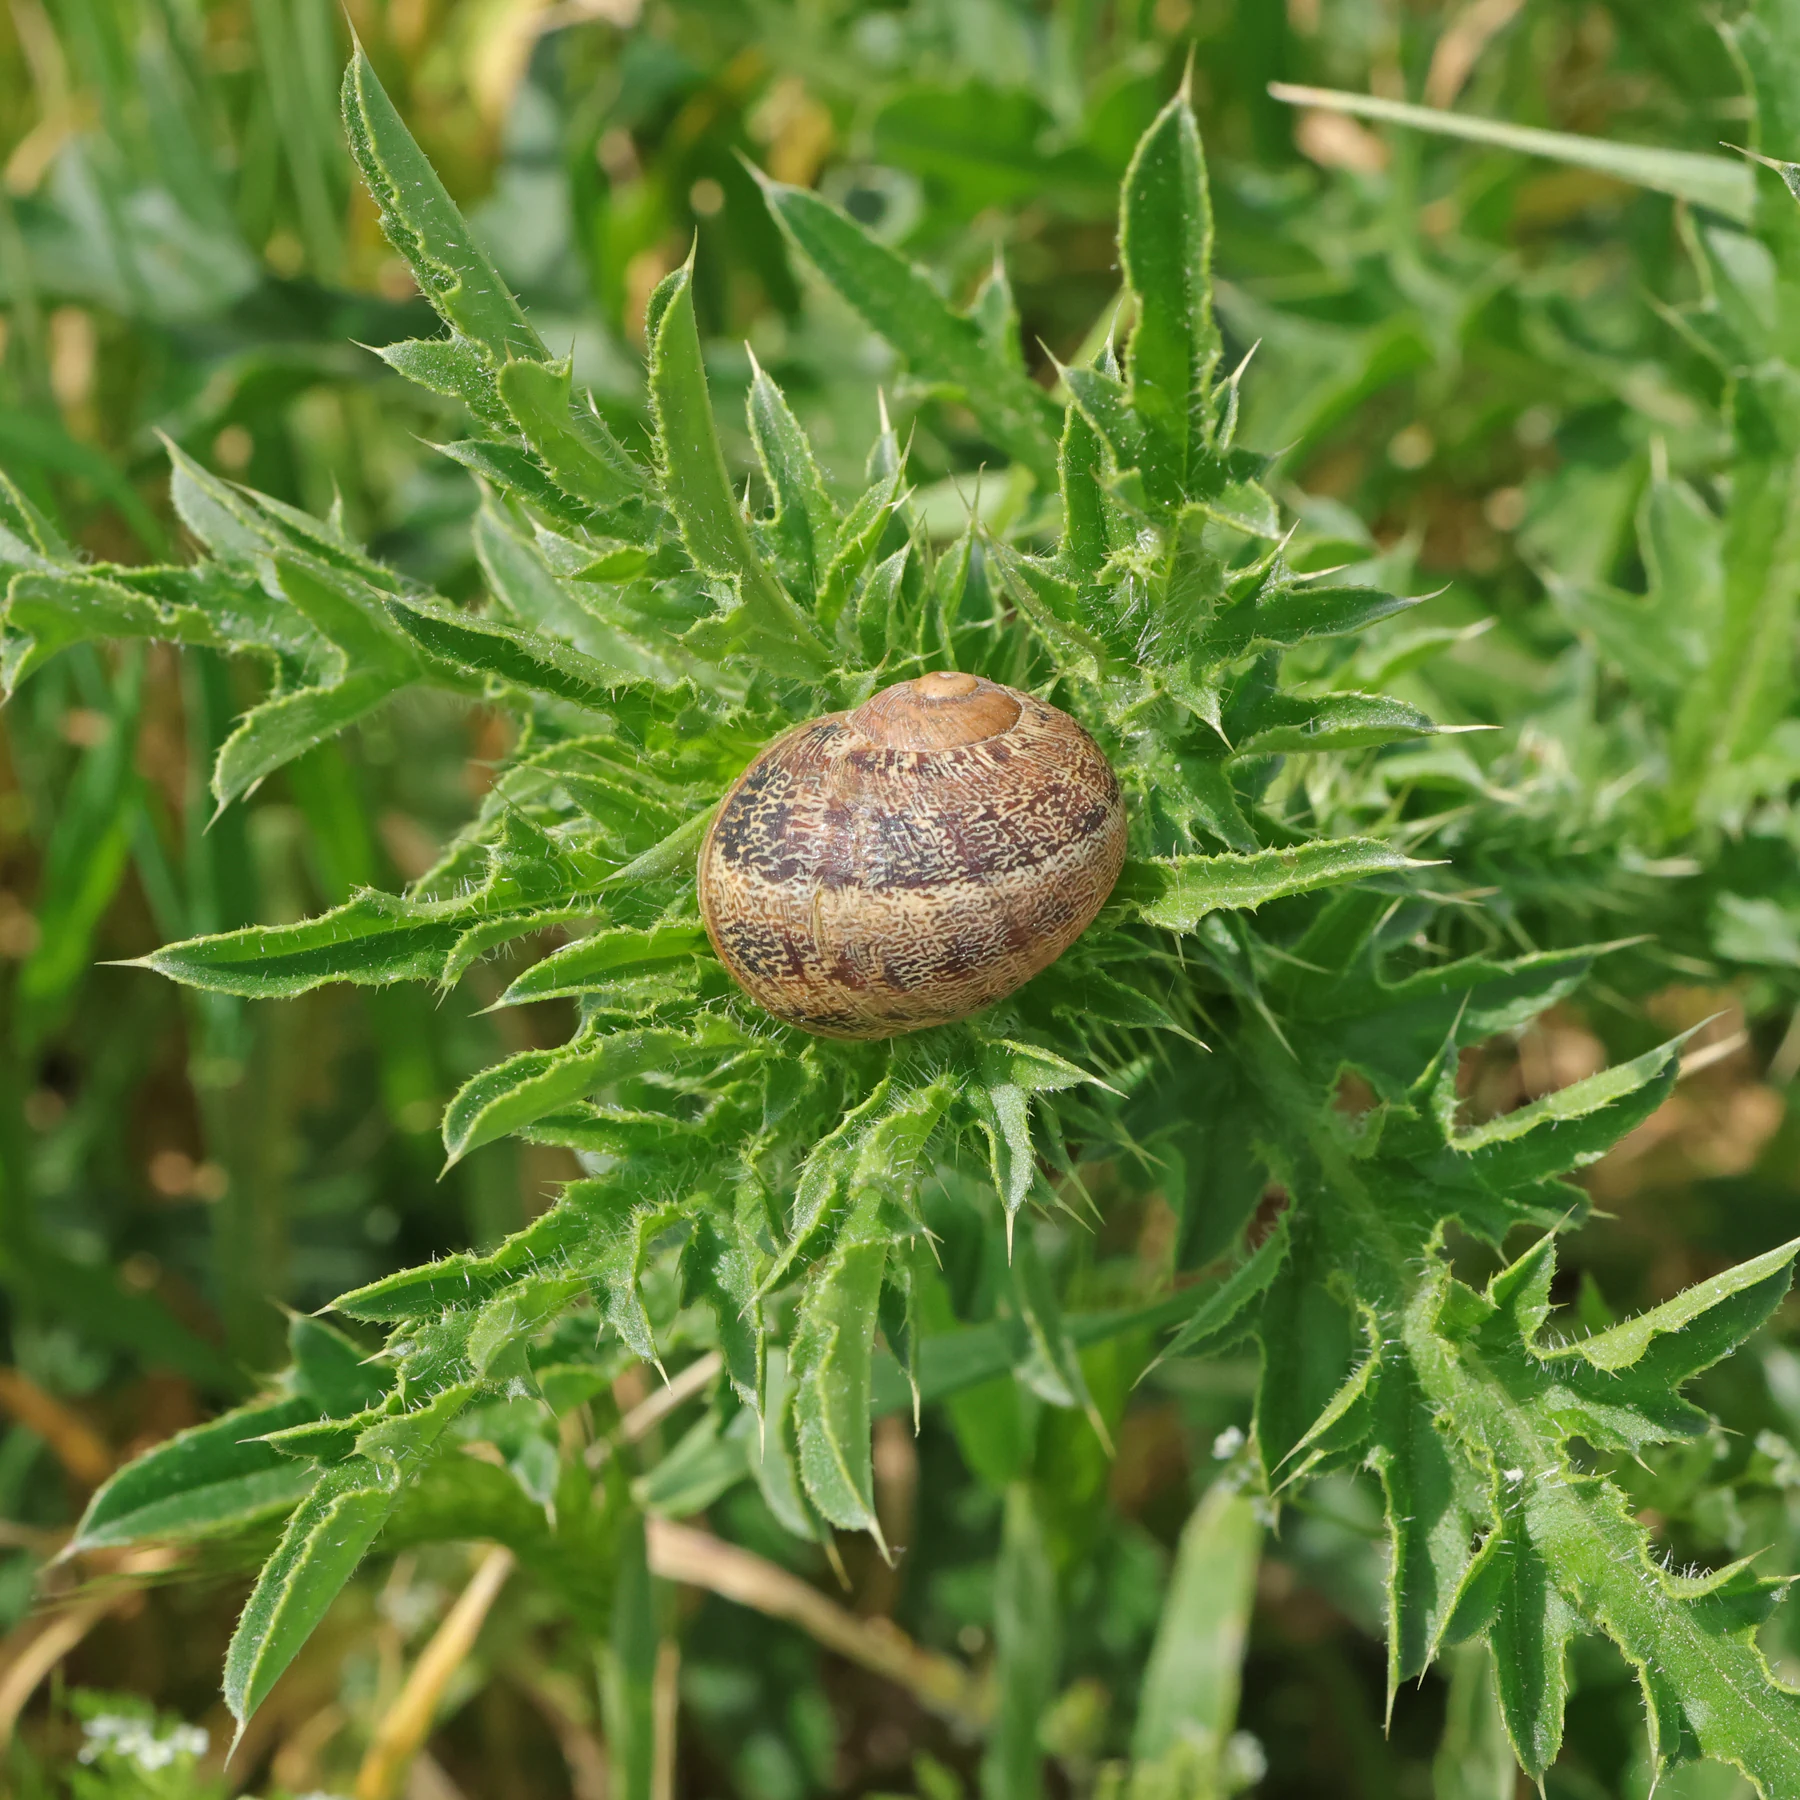 Garden Snail on Spear Thistle